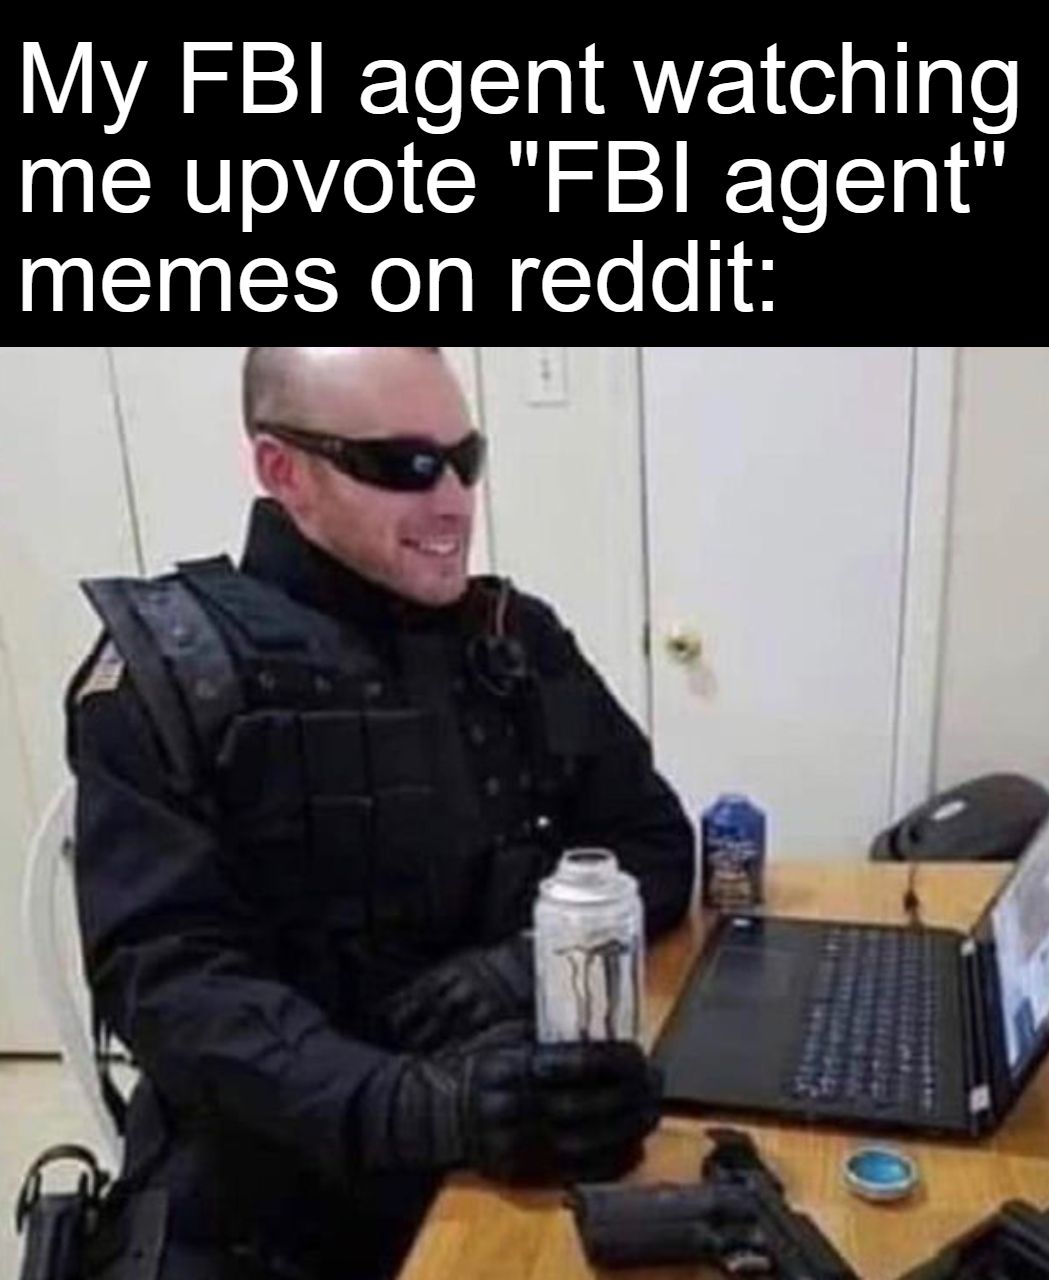 Hello FBI agent